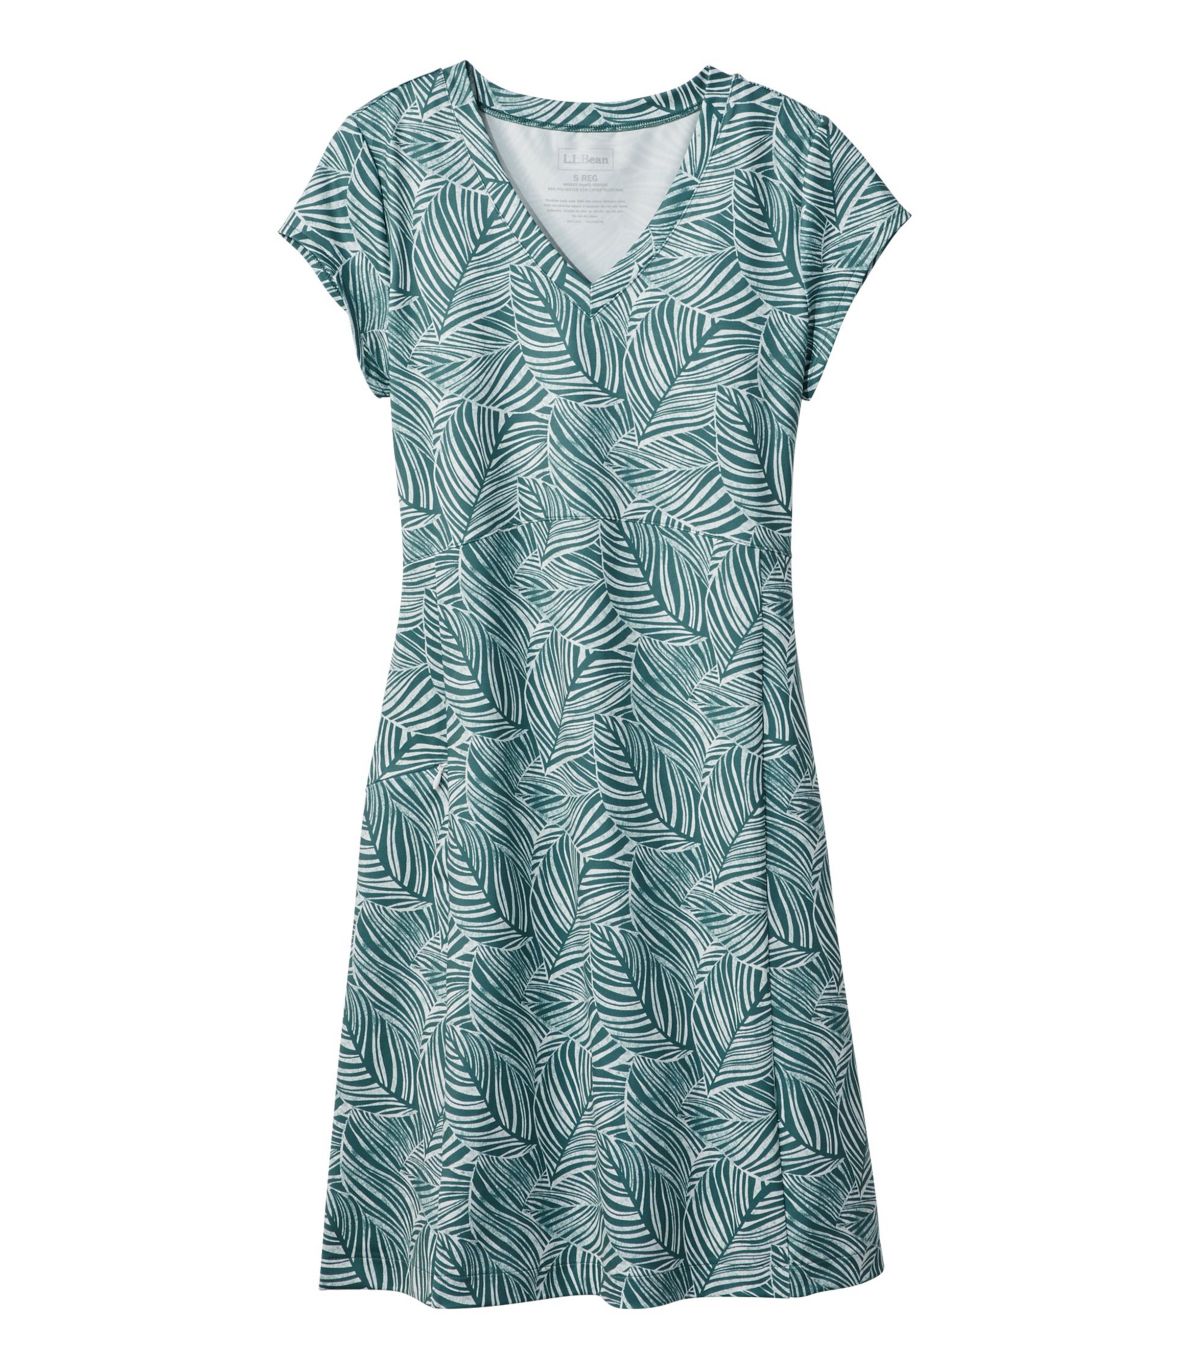 Women's Short-Sleeve Fitness Dress, Leaf Print